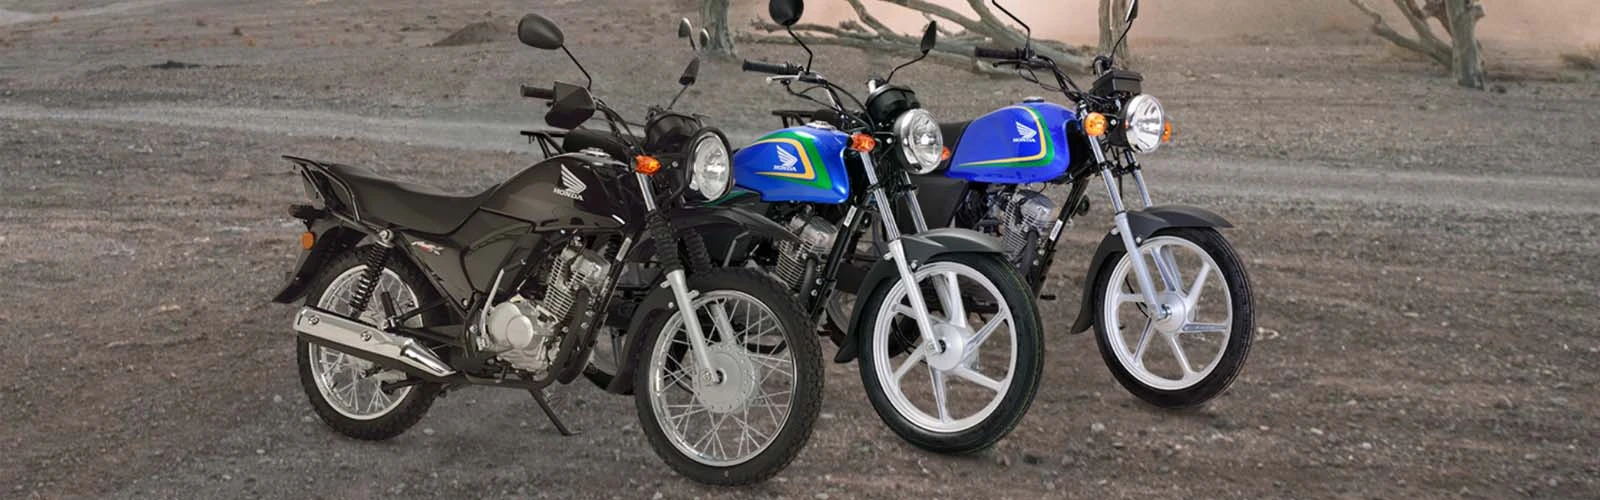 Honda Motorbikes for Sale in Zambia